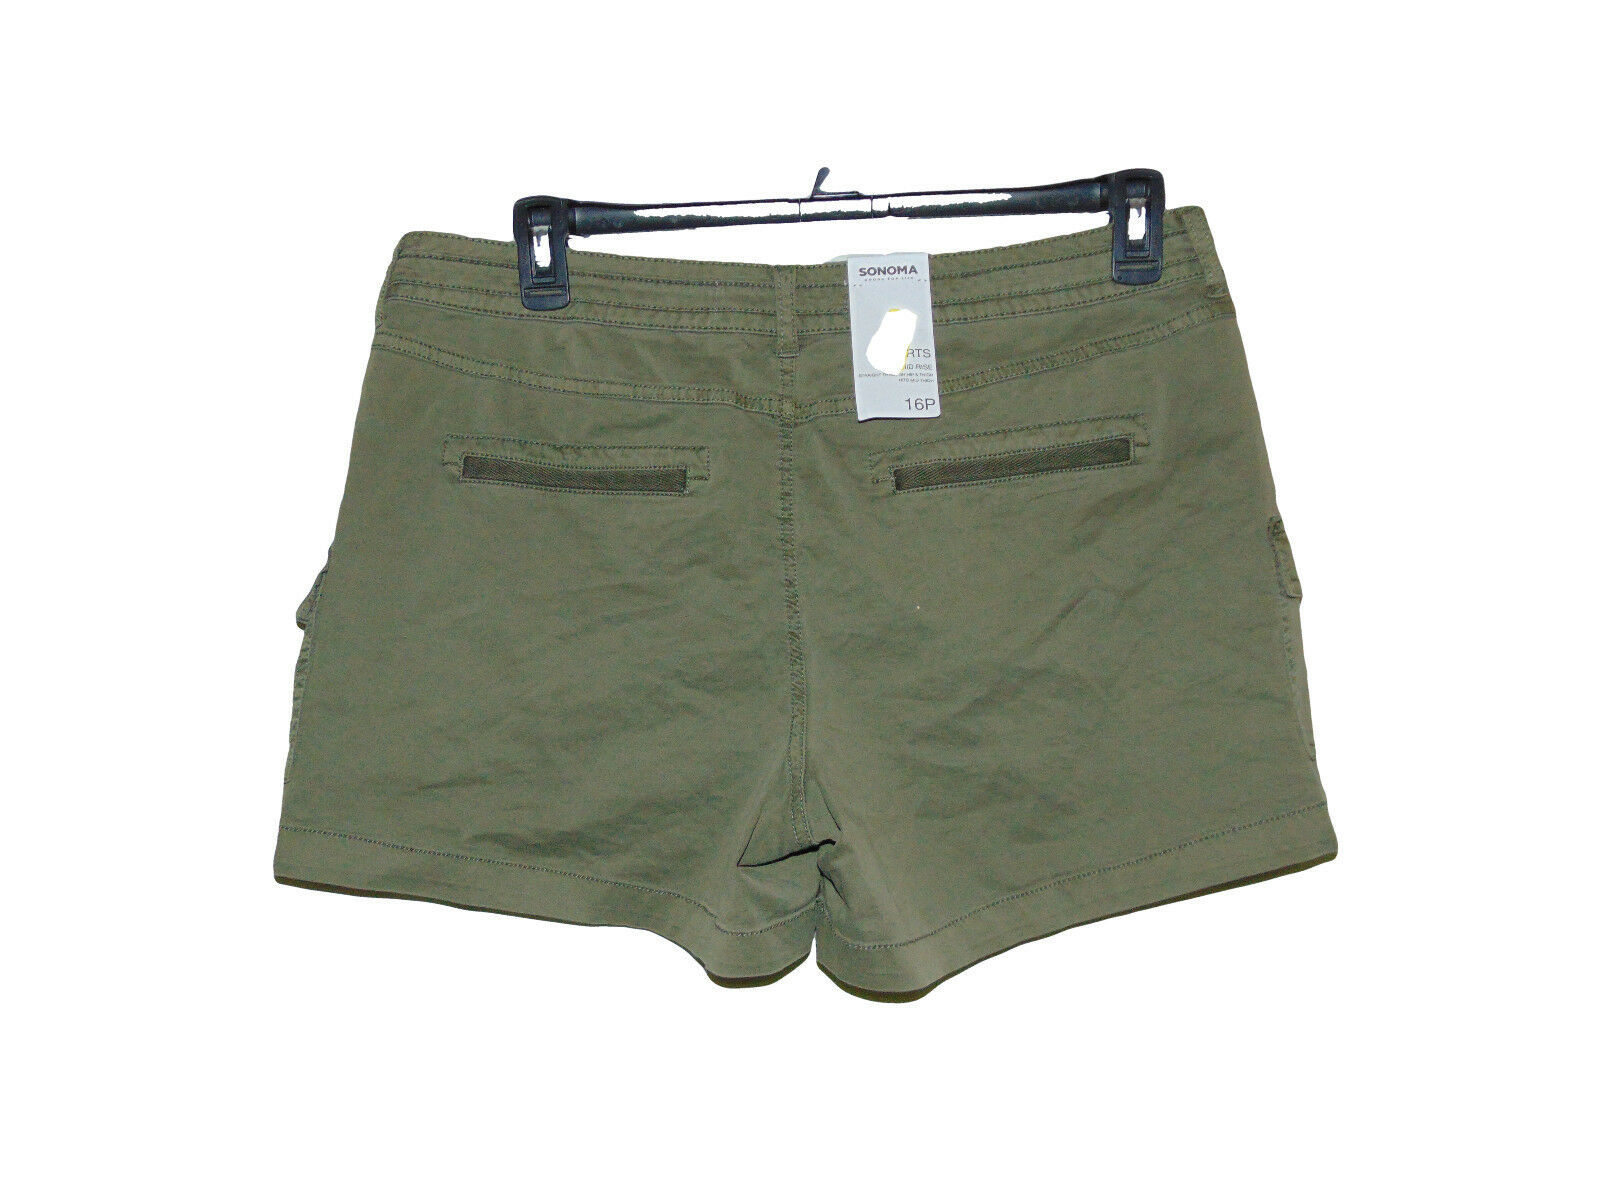 Sonoma Od Green Cargo Shorts 16P Women Petite New - Shorts